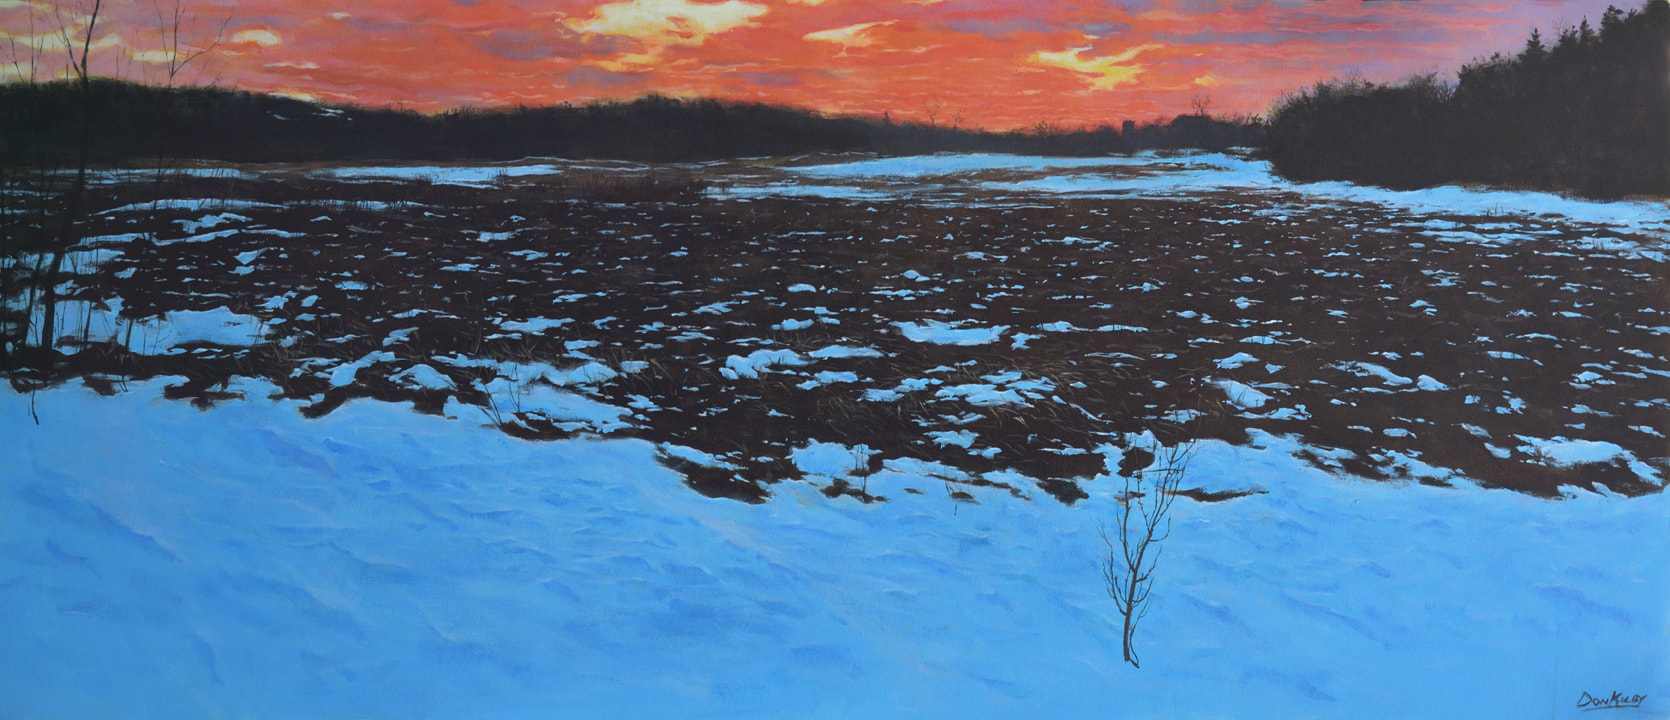 sunrise
nature
winter
painting
realism